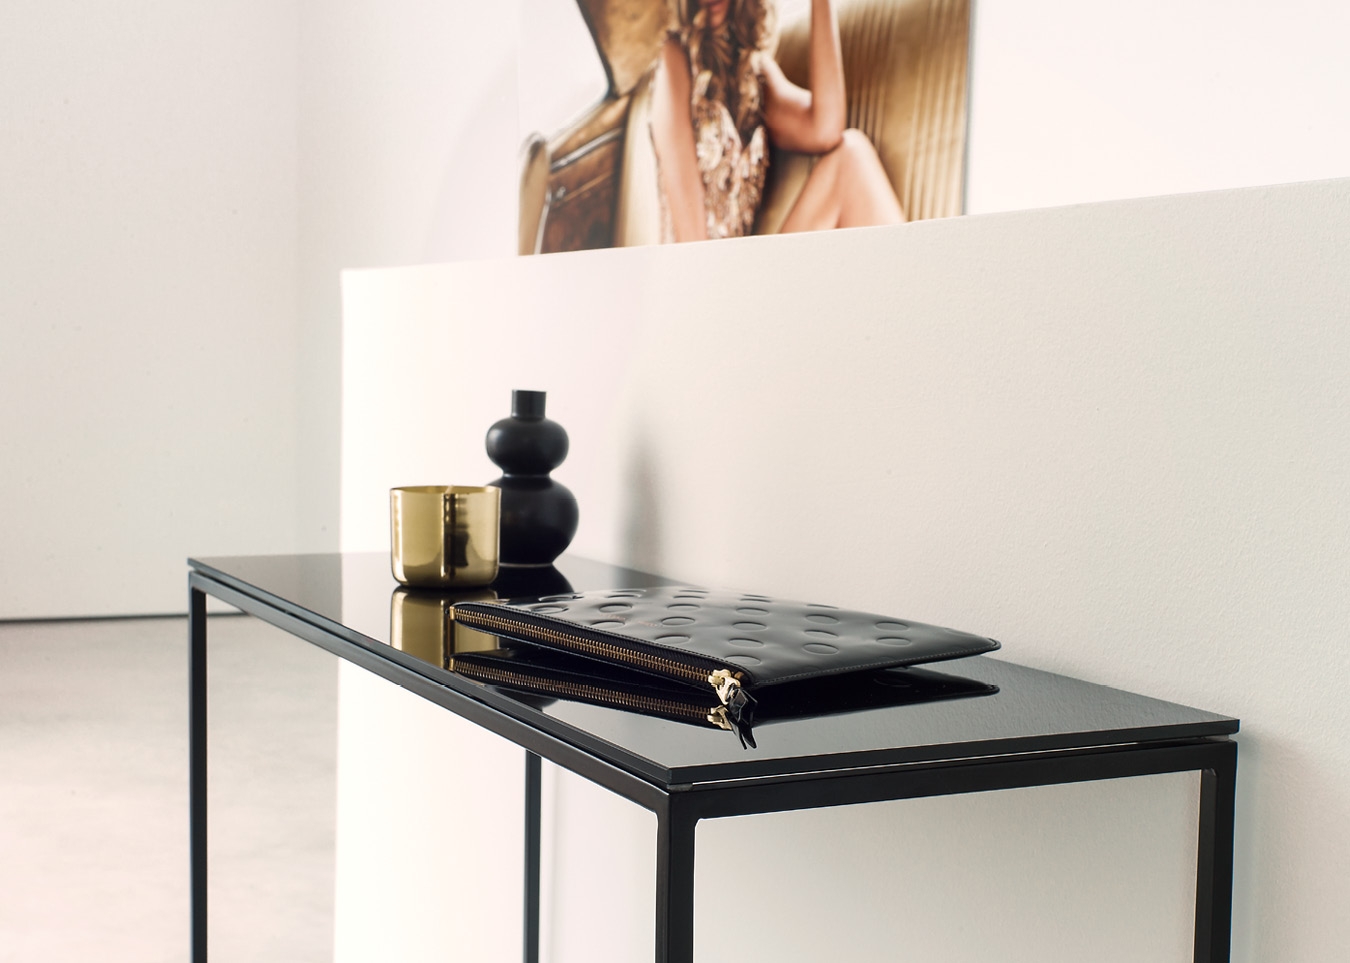 Schönbuch designer console table Rack metal frame glass top rectangular black minimalist f/p design